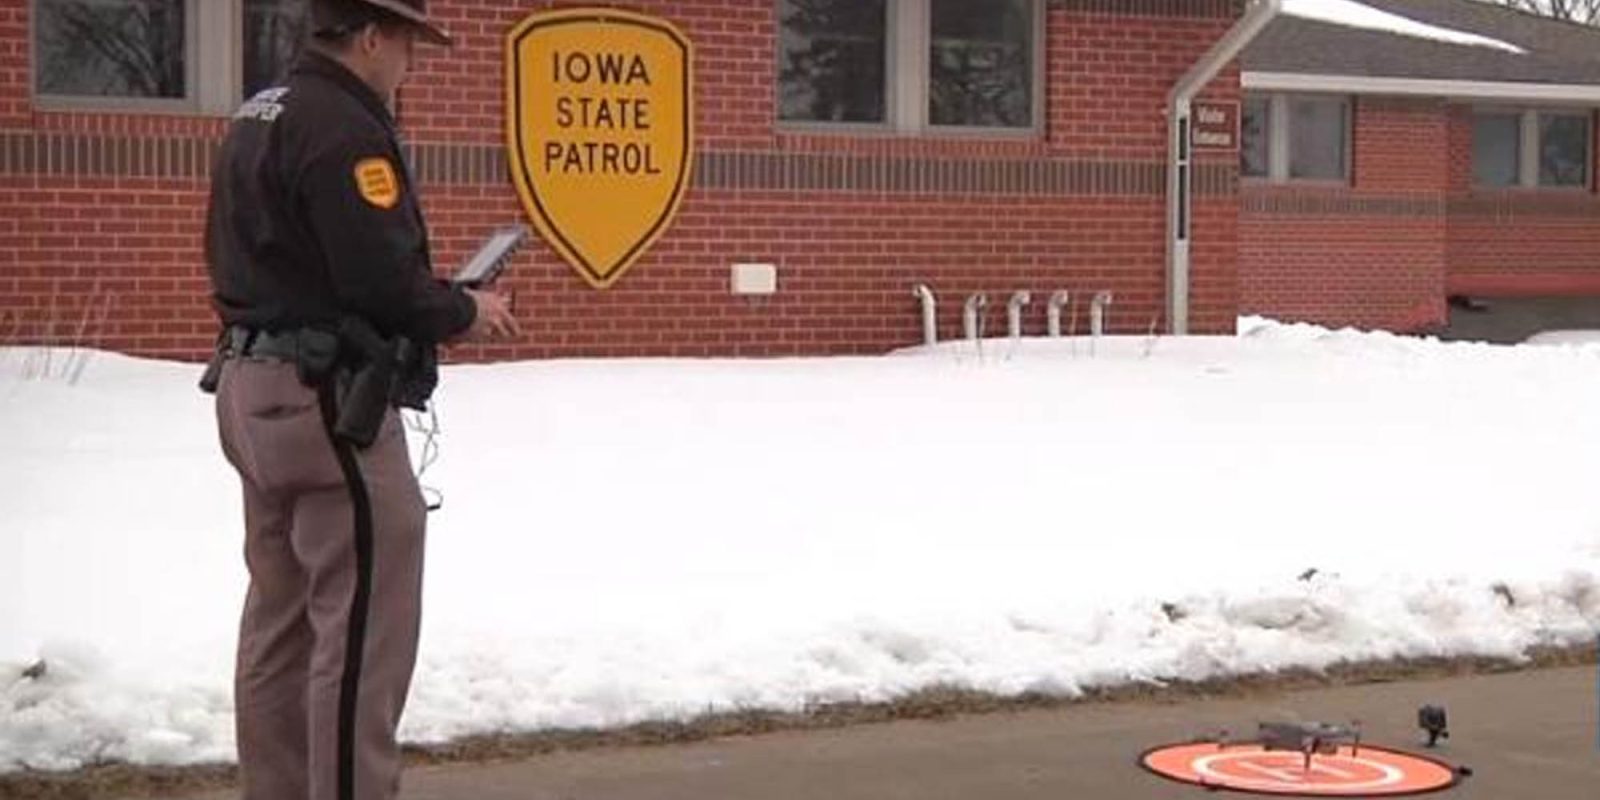 Iowa Sate Patrol drones police